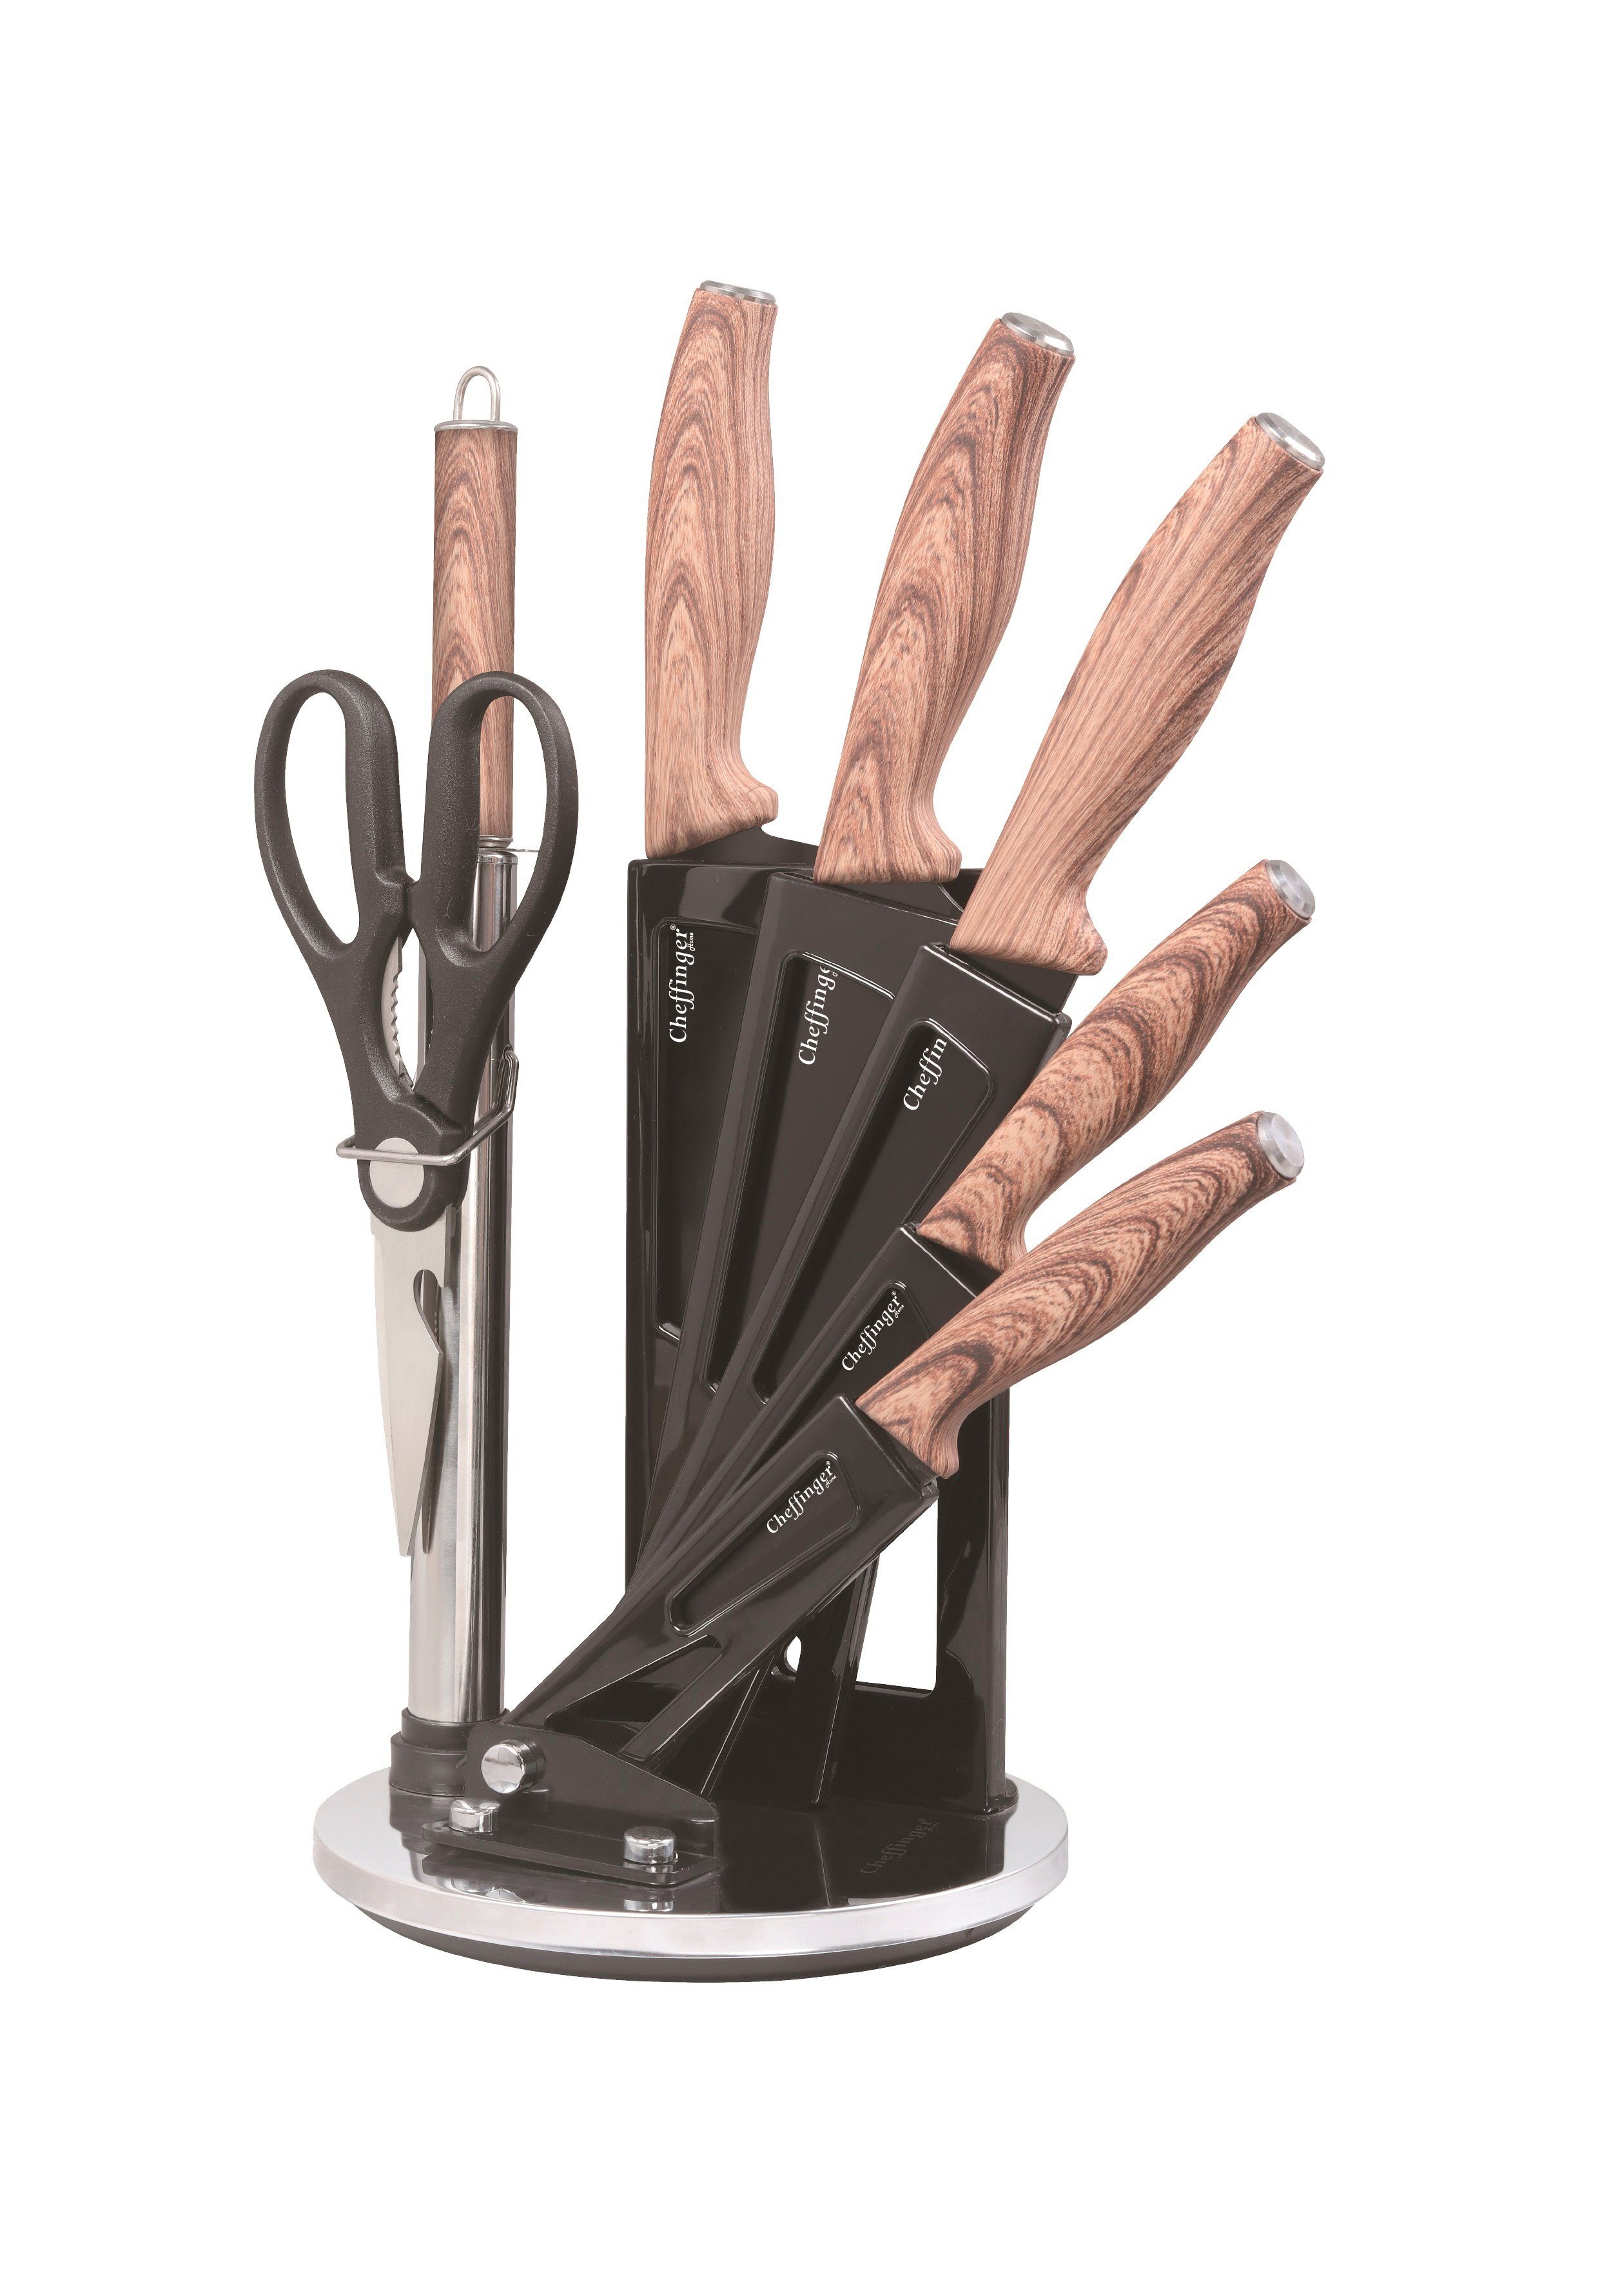 Cheffinger Messer-Set 8 tlg. Messerset Kochmesser Messer (8-tlg) Messerständer drehbar Messerblock